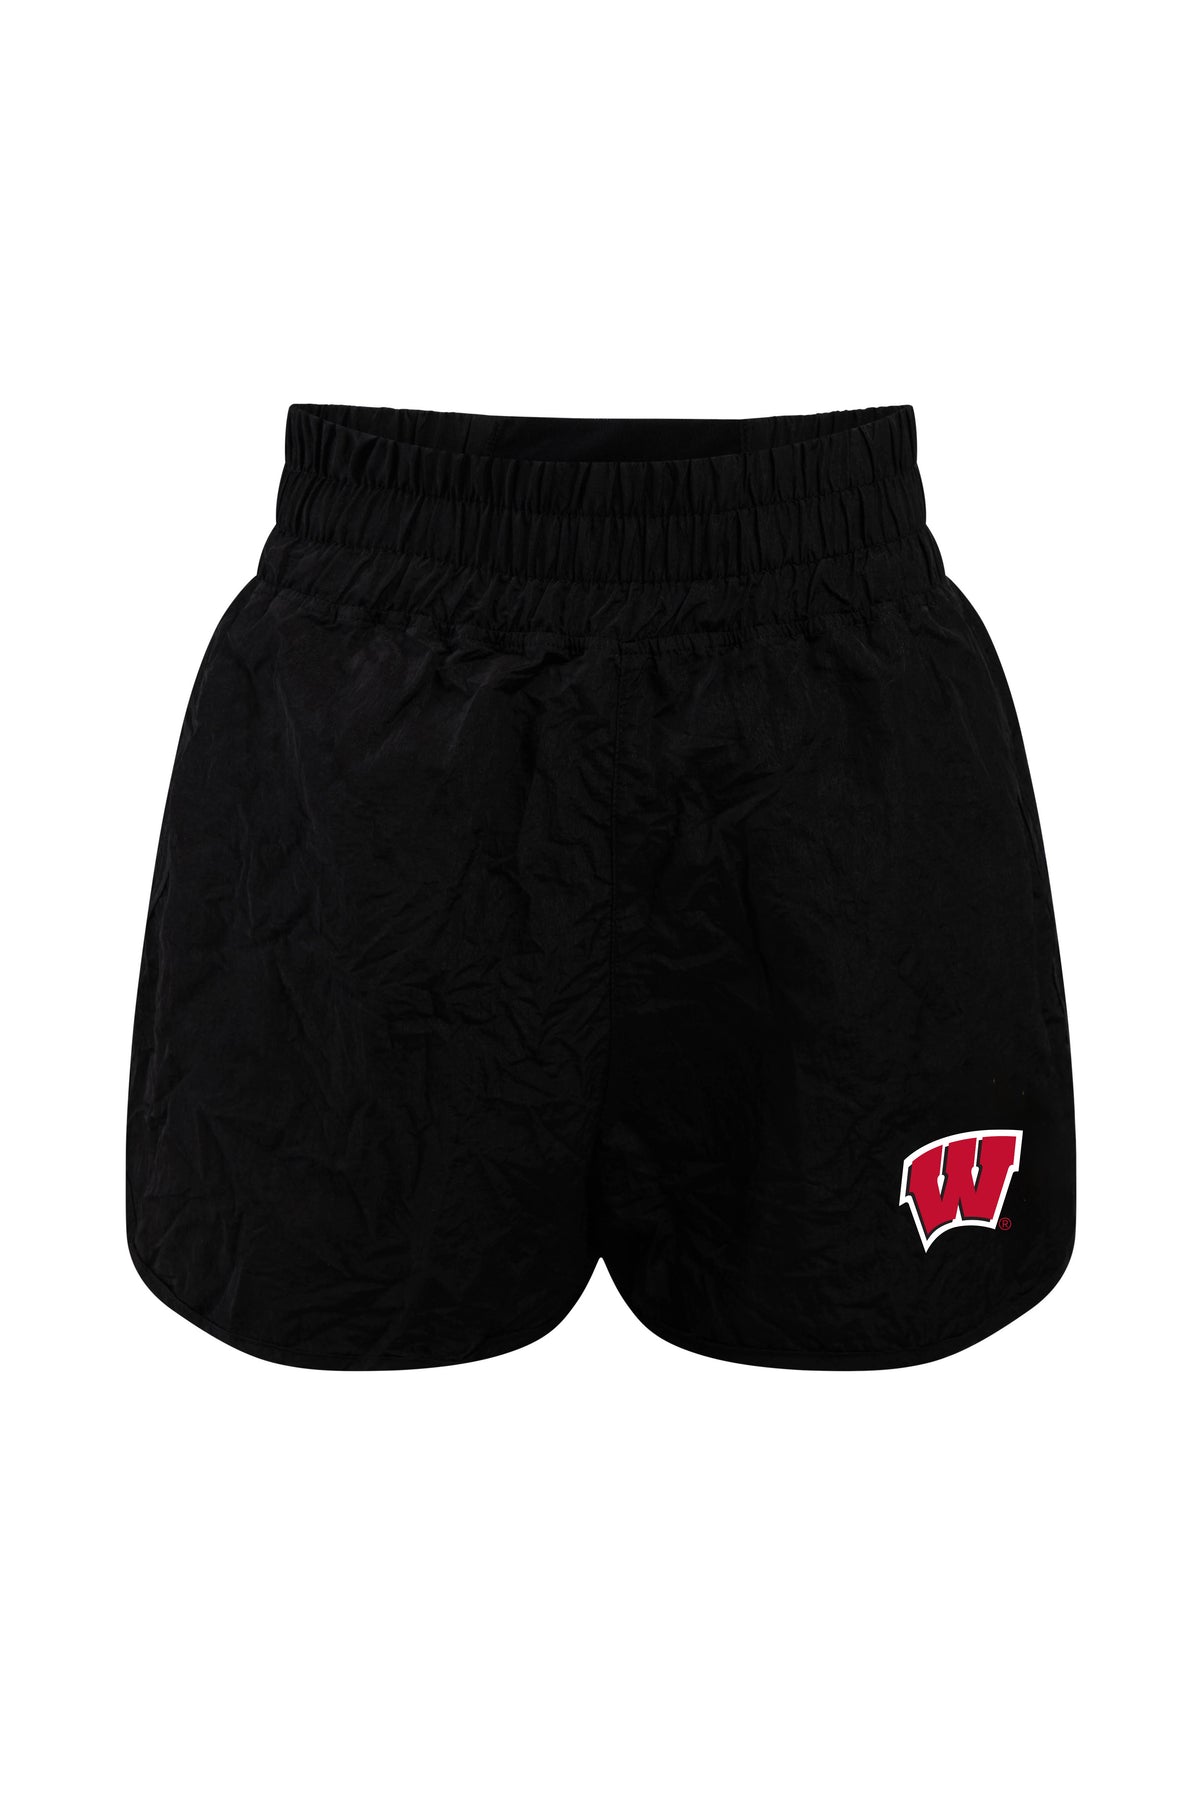 University of Wisconsin Boxer Short